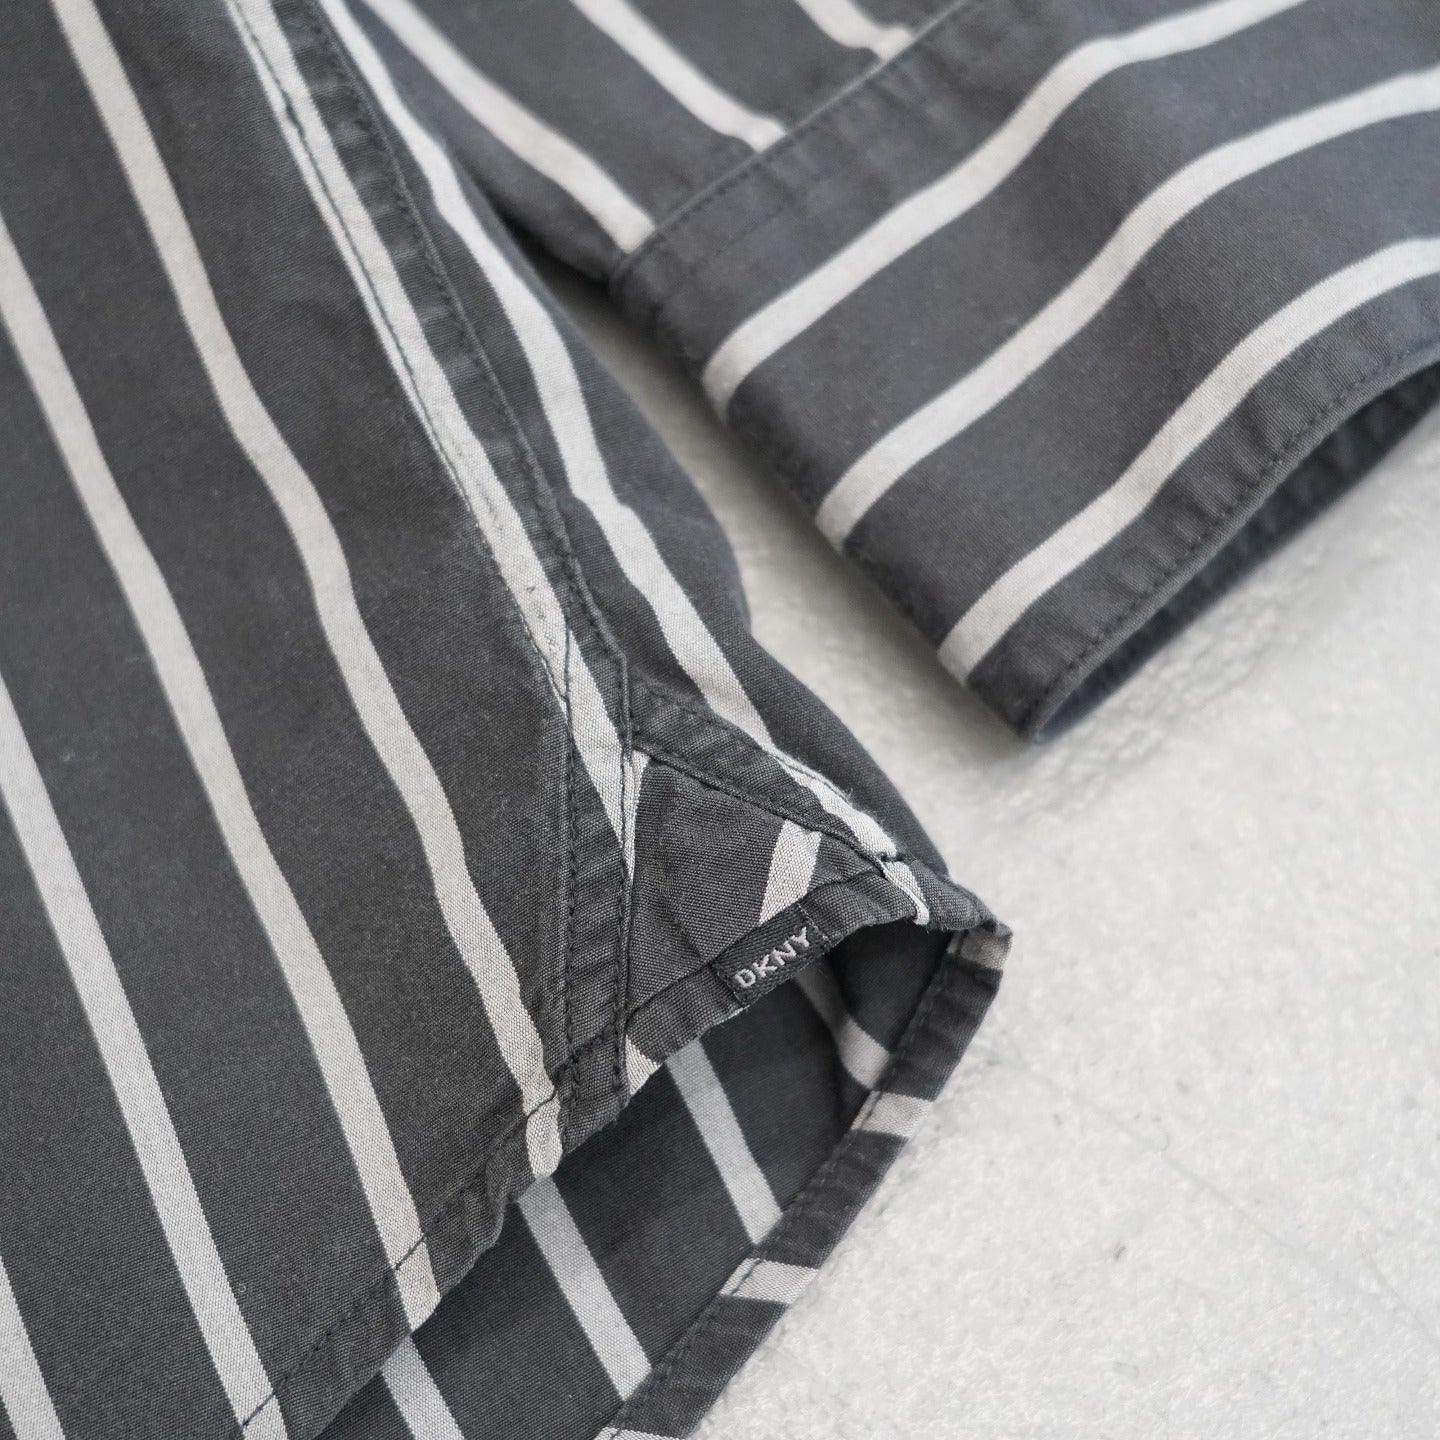 DKNY Striped L/S Shirt